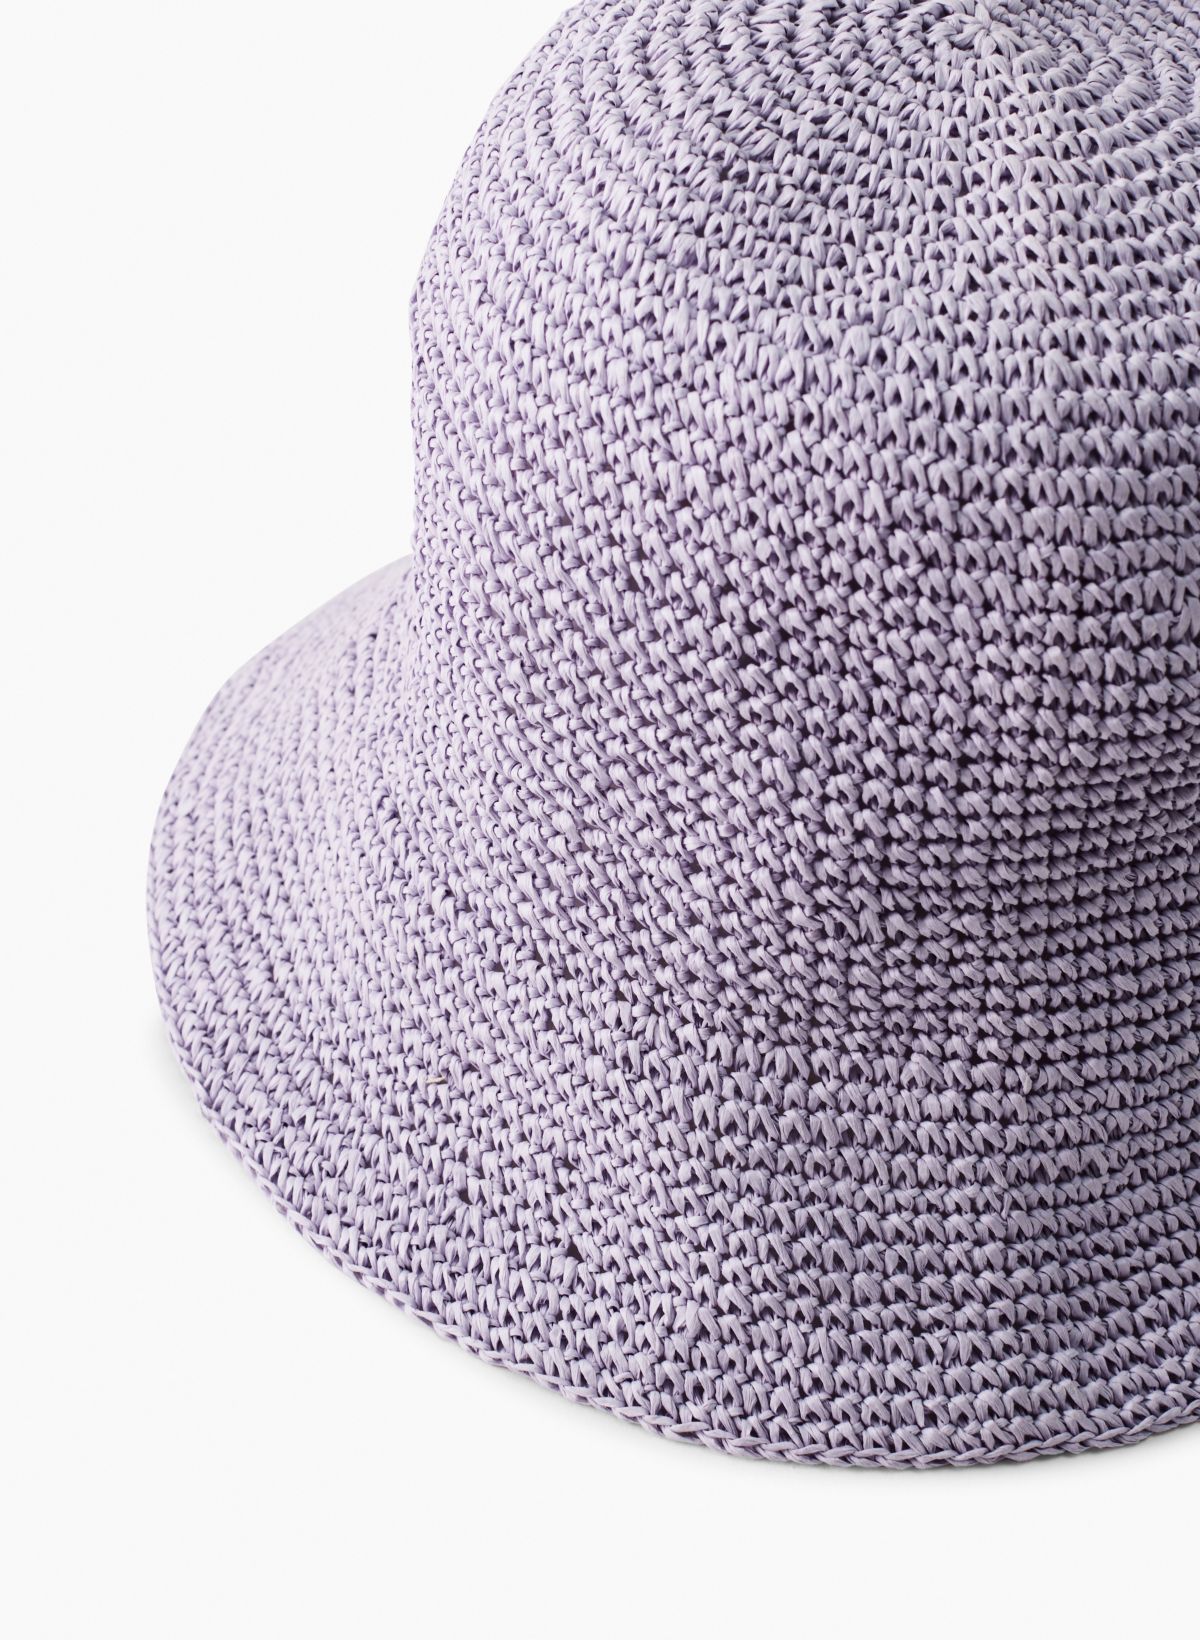 Super Cute Print Bucket Hat for Winter Cozy Accessories - Pattern Print Fur Bucket Hat